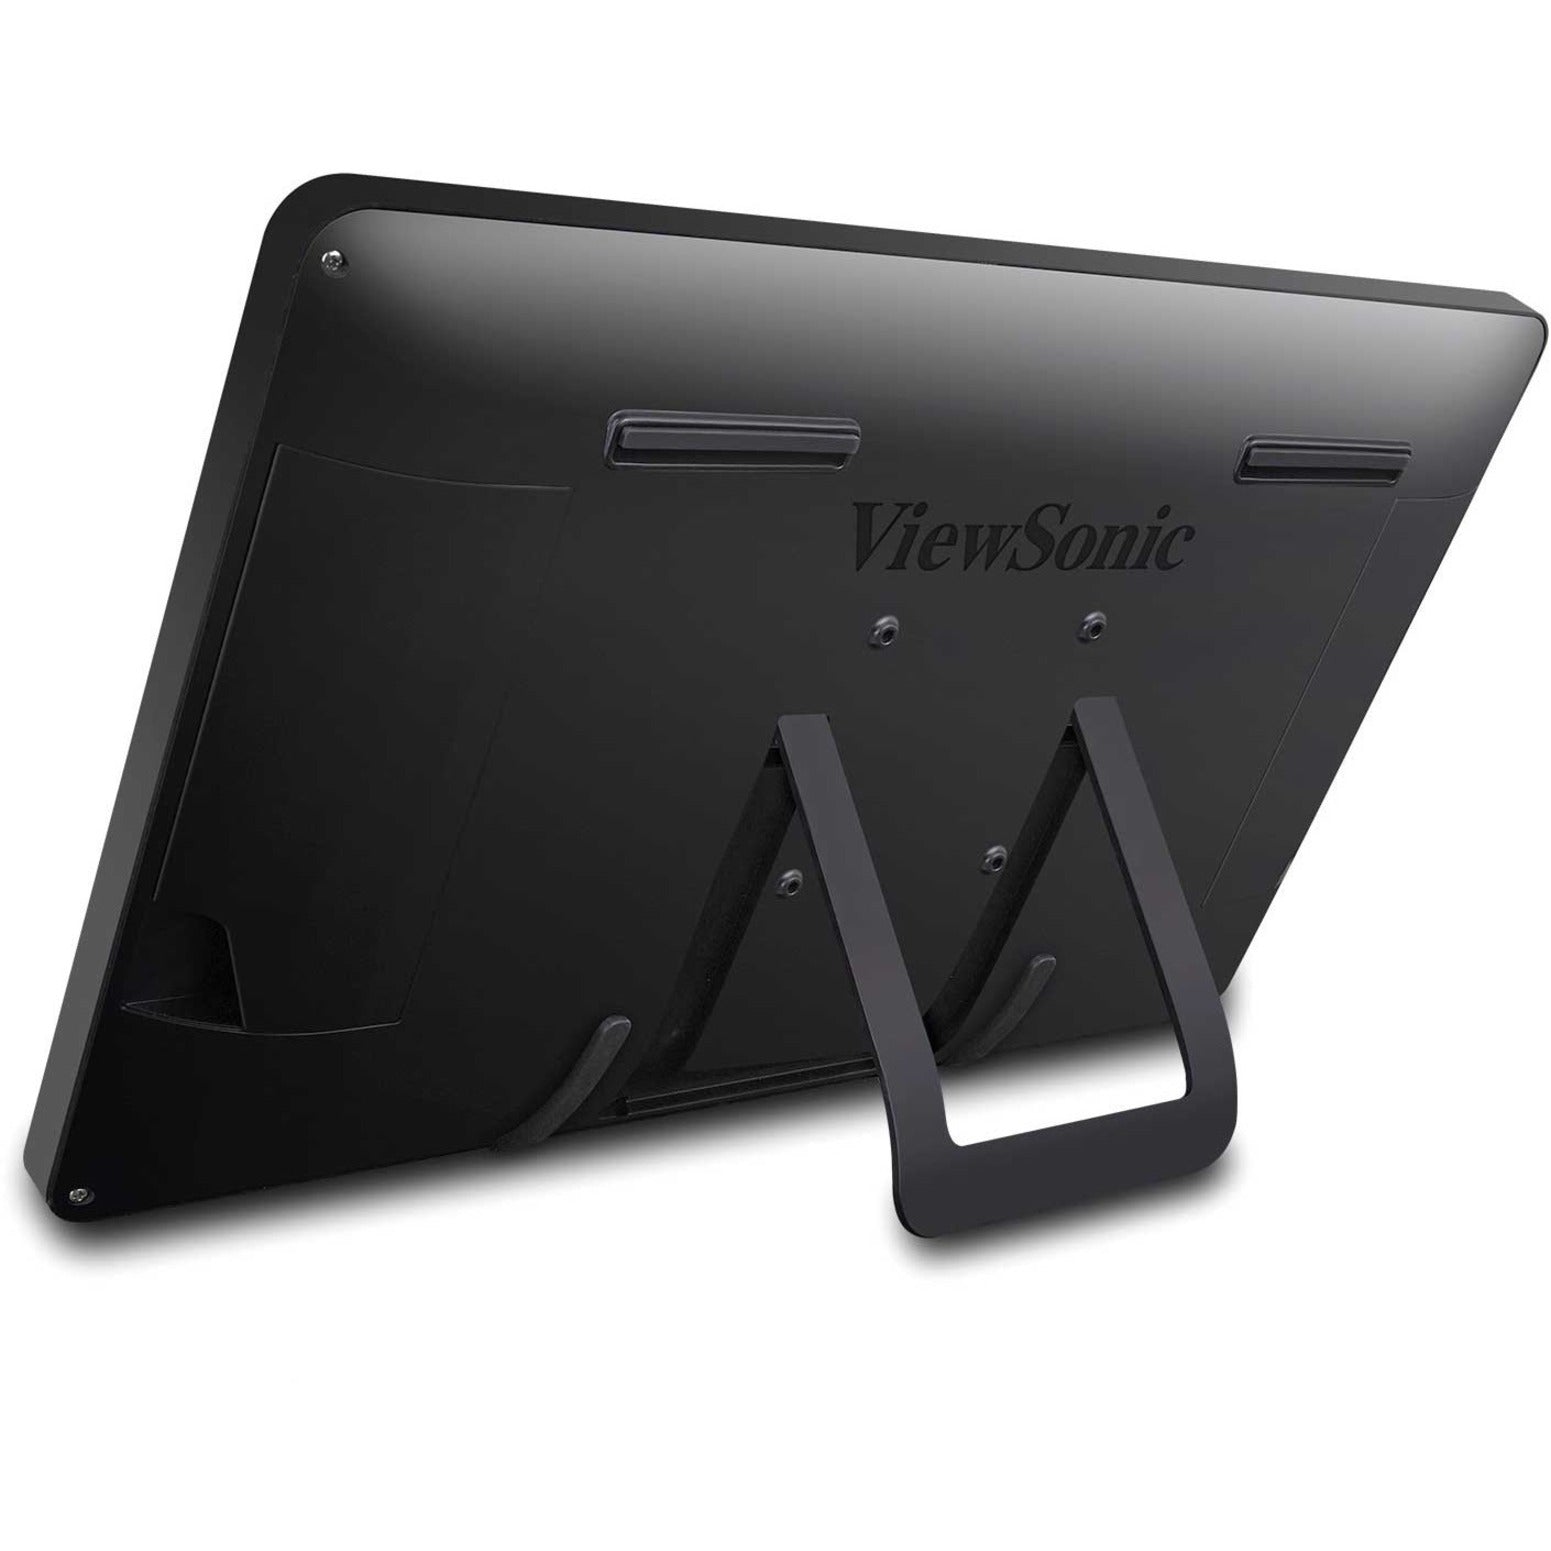 ViewSonic VSD243-BKA-US0 VSD243 Digital Signage Display, 24" Touchscreen, Android 8.1 Oreo, 3 Year Warranty